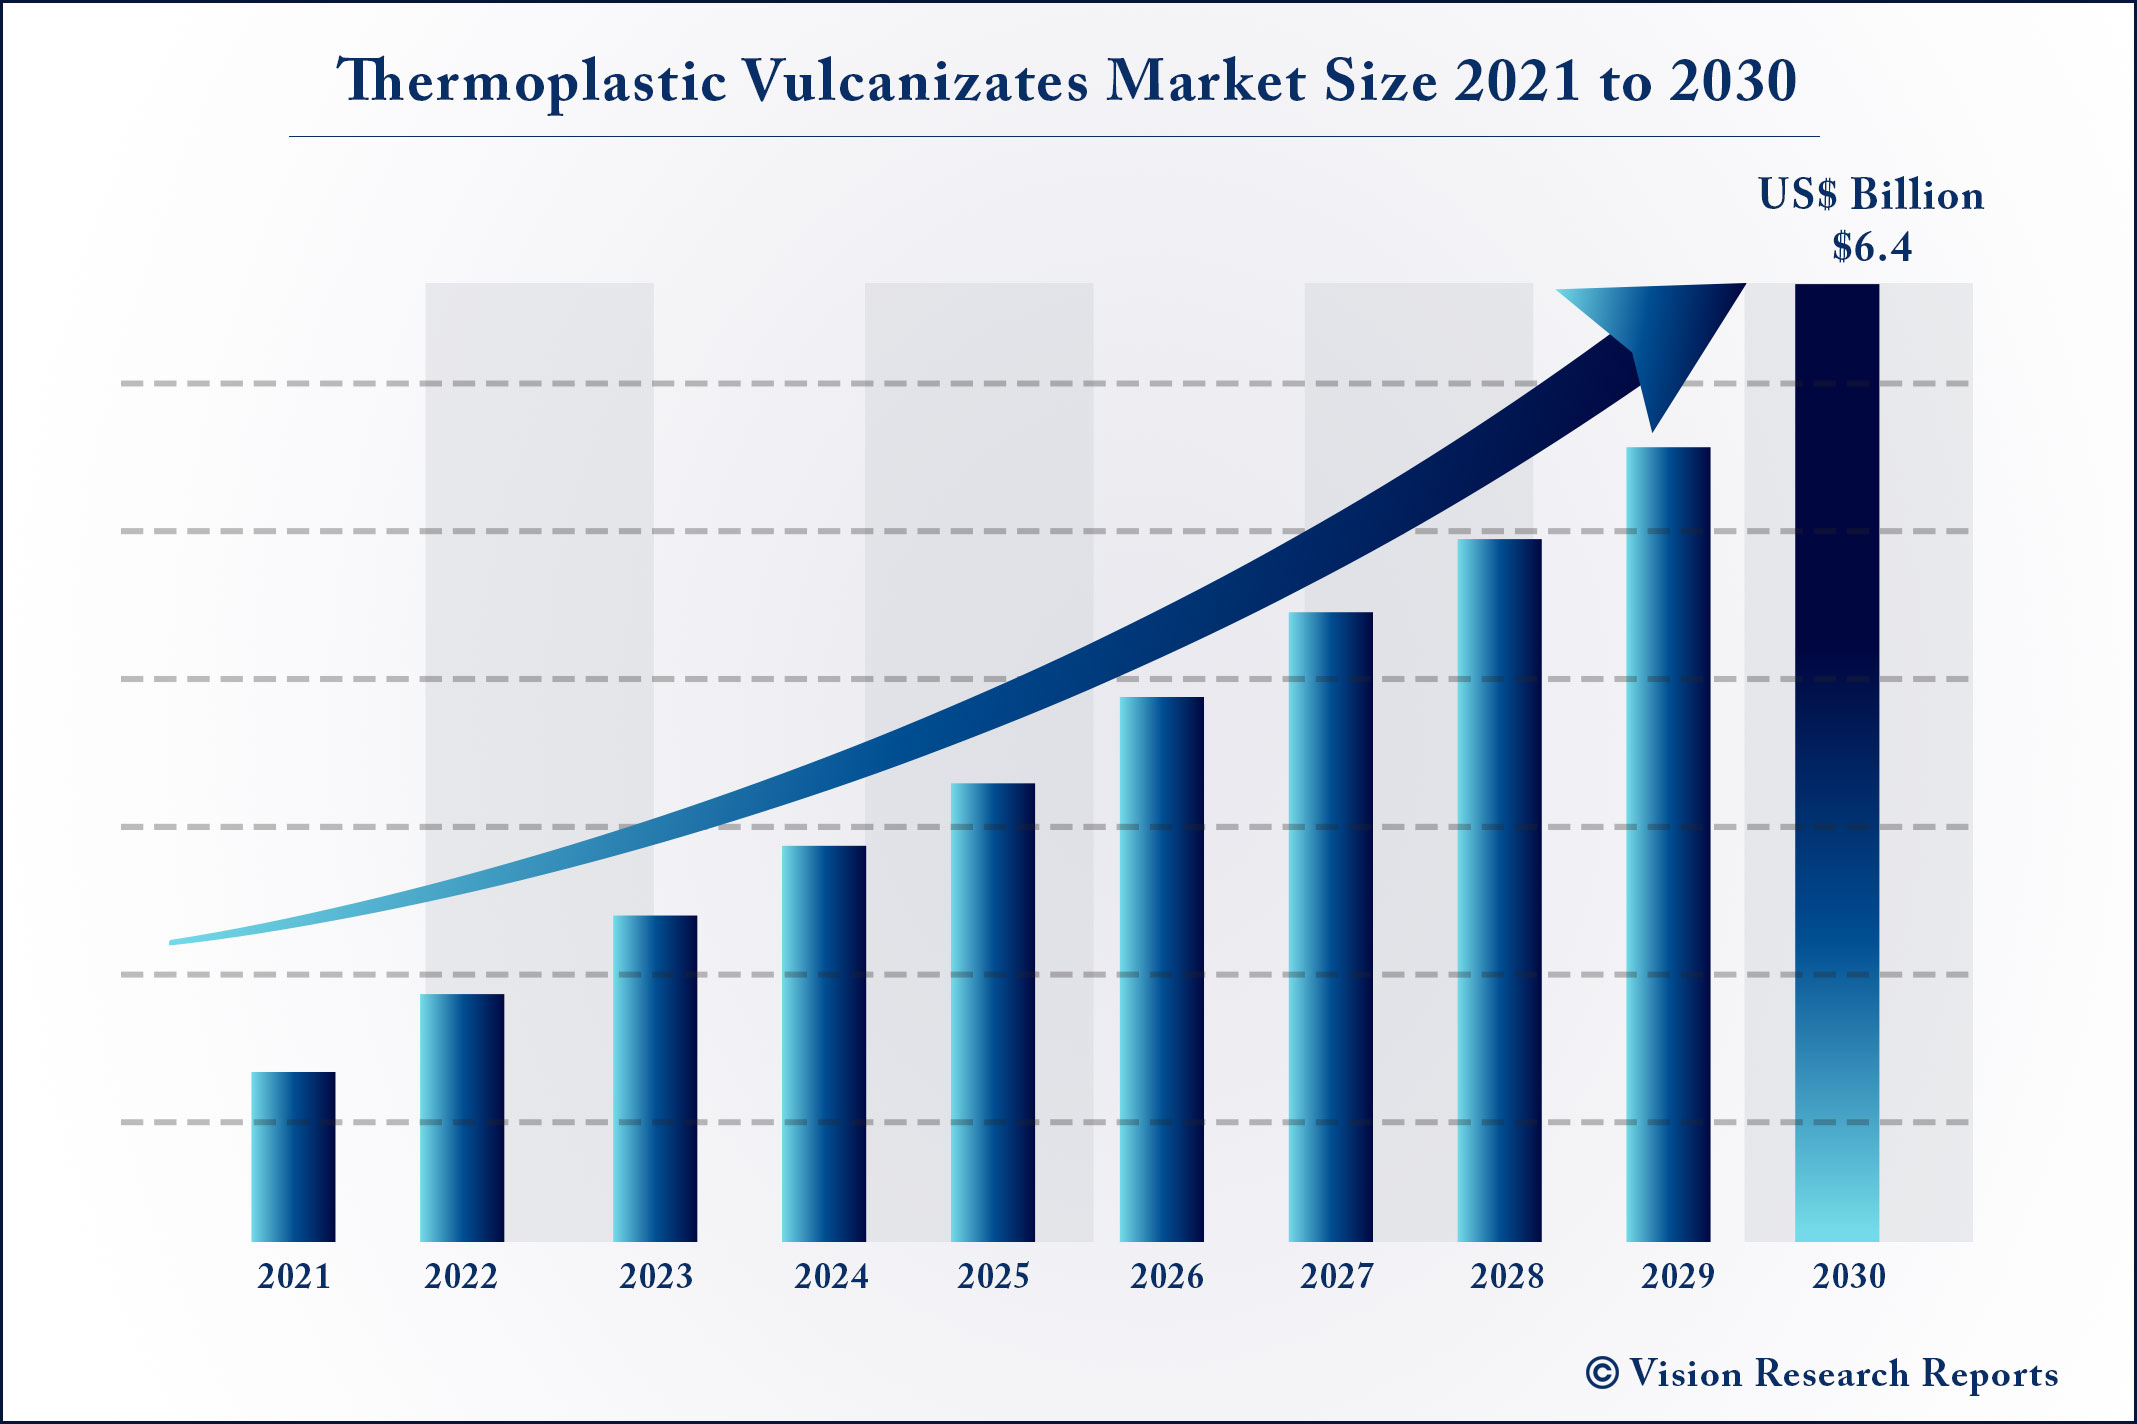 Thermoplastic Vulcanizates Market Size 2021 to 2030